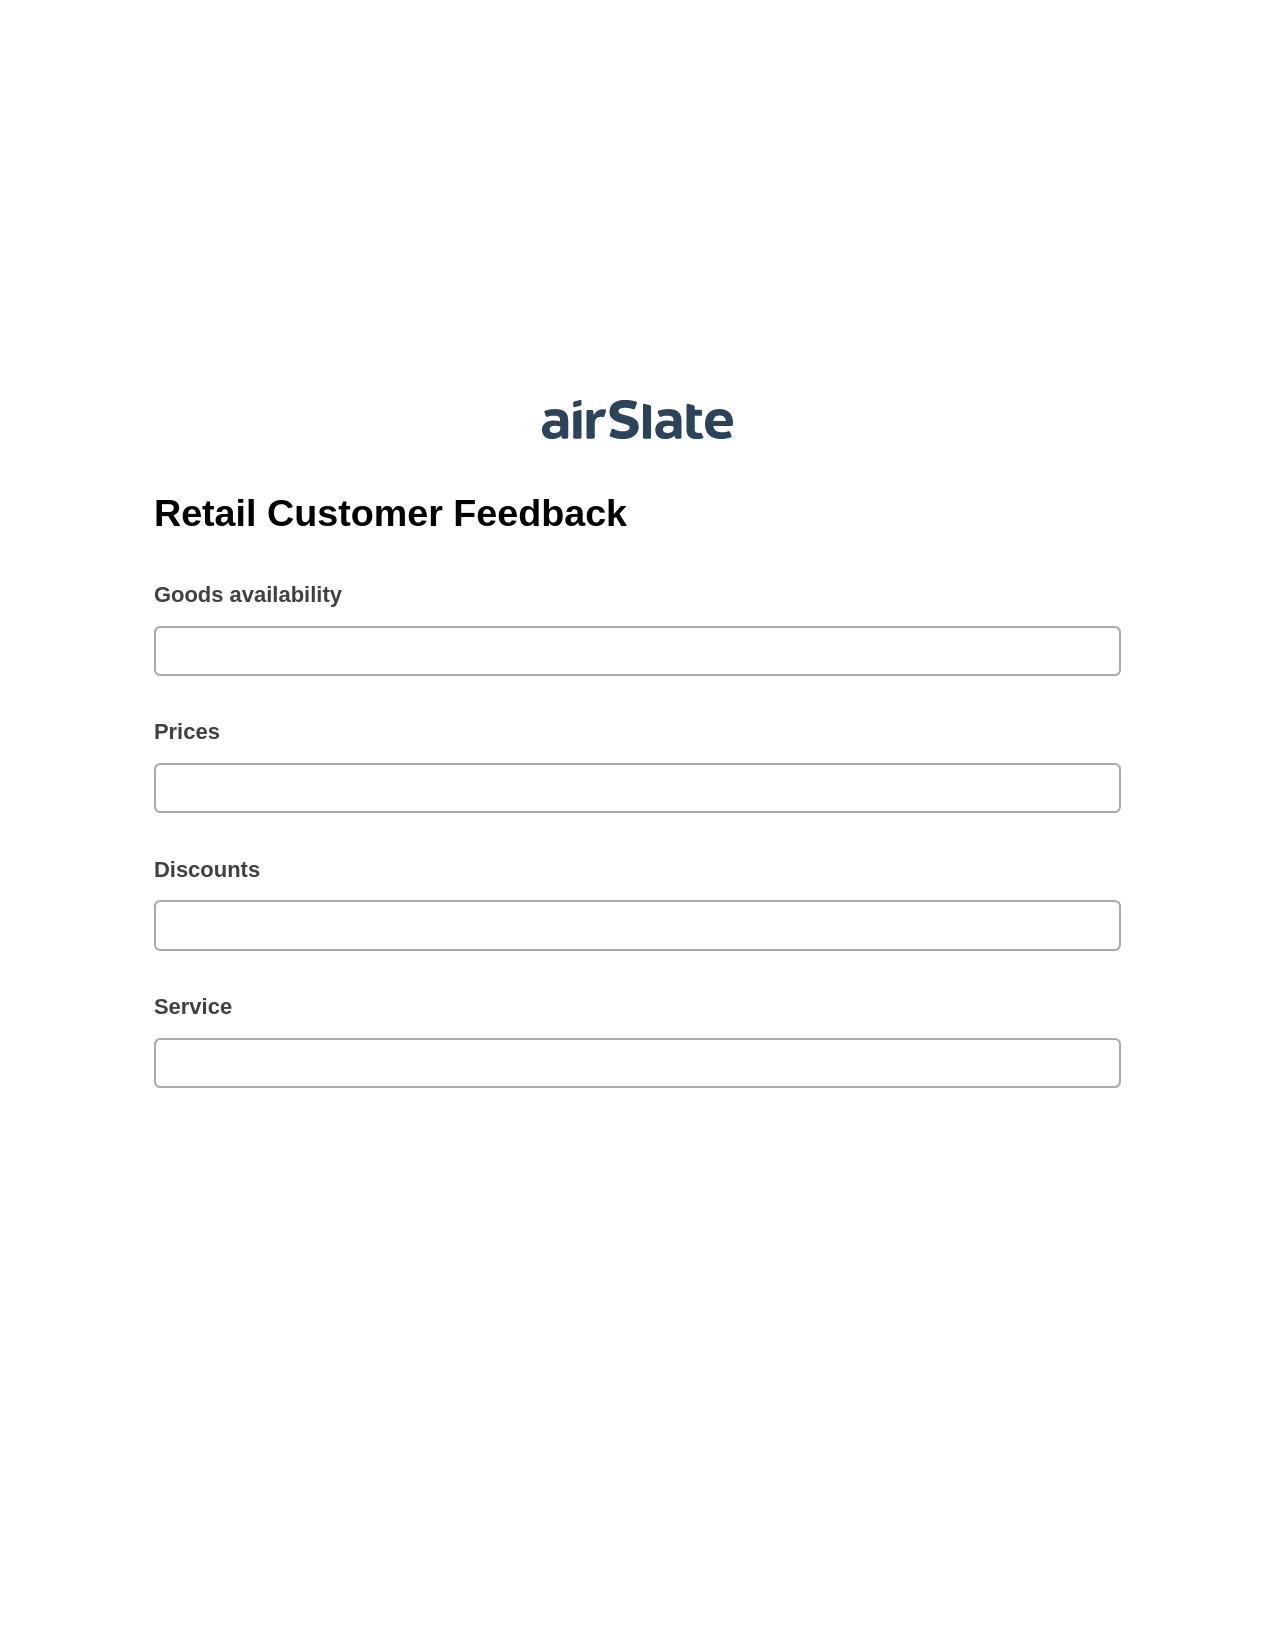 Retail Customer Feedback Pre-fill Slate from MS Dynamics 365 Records Bot, Slack Notification Bot, Box Bot